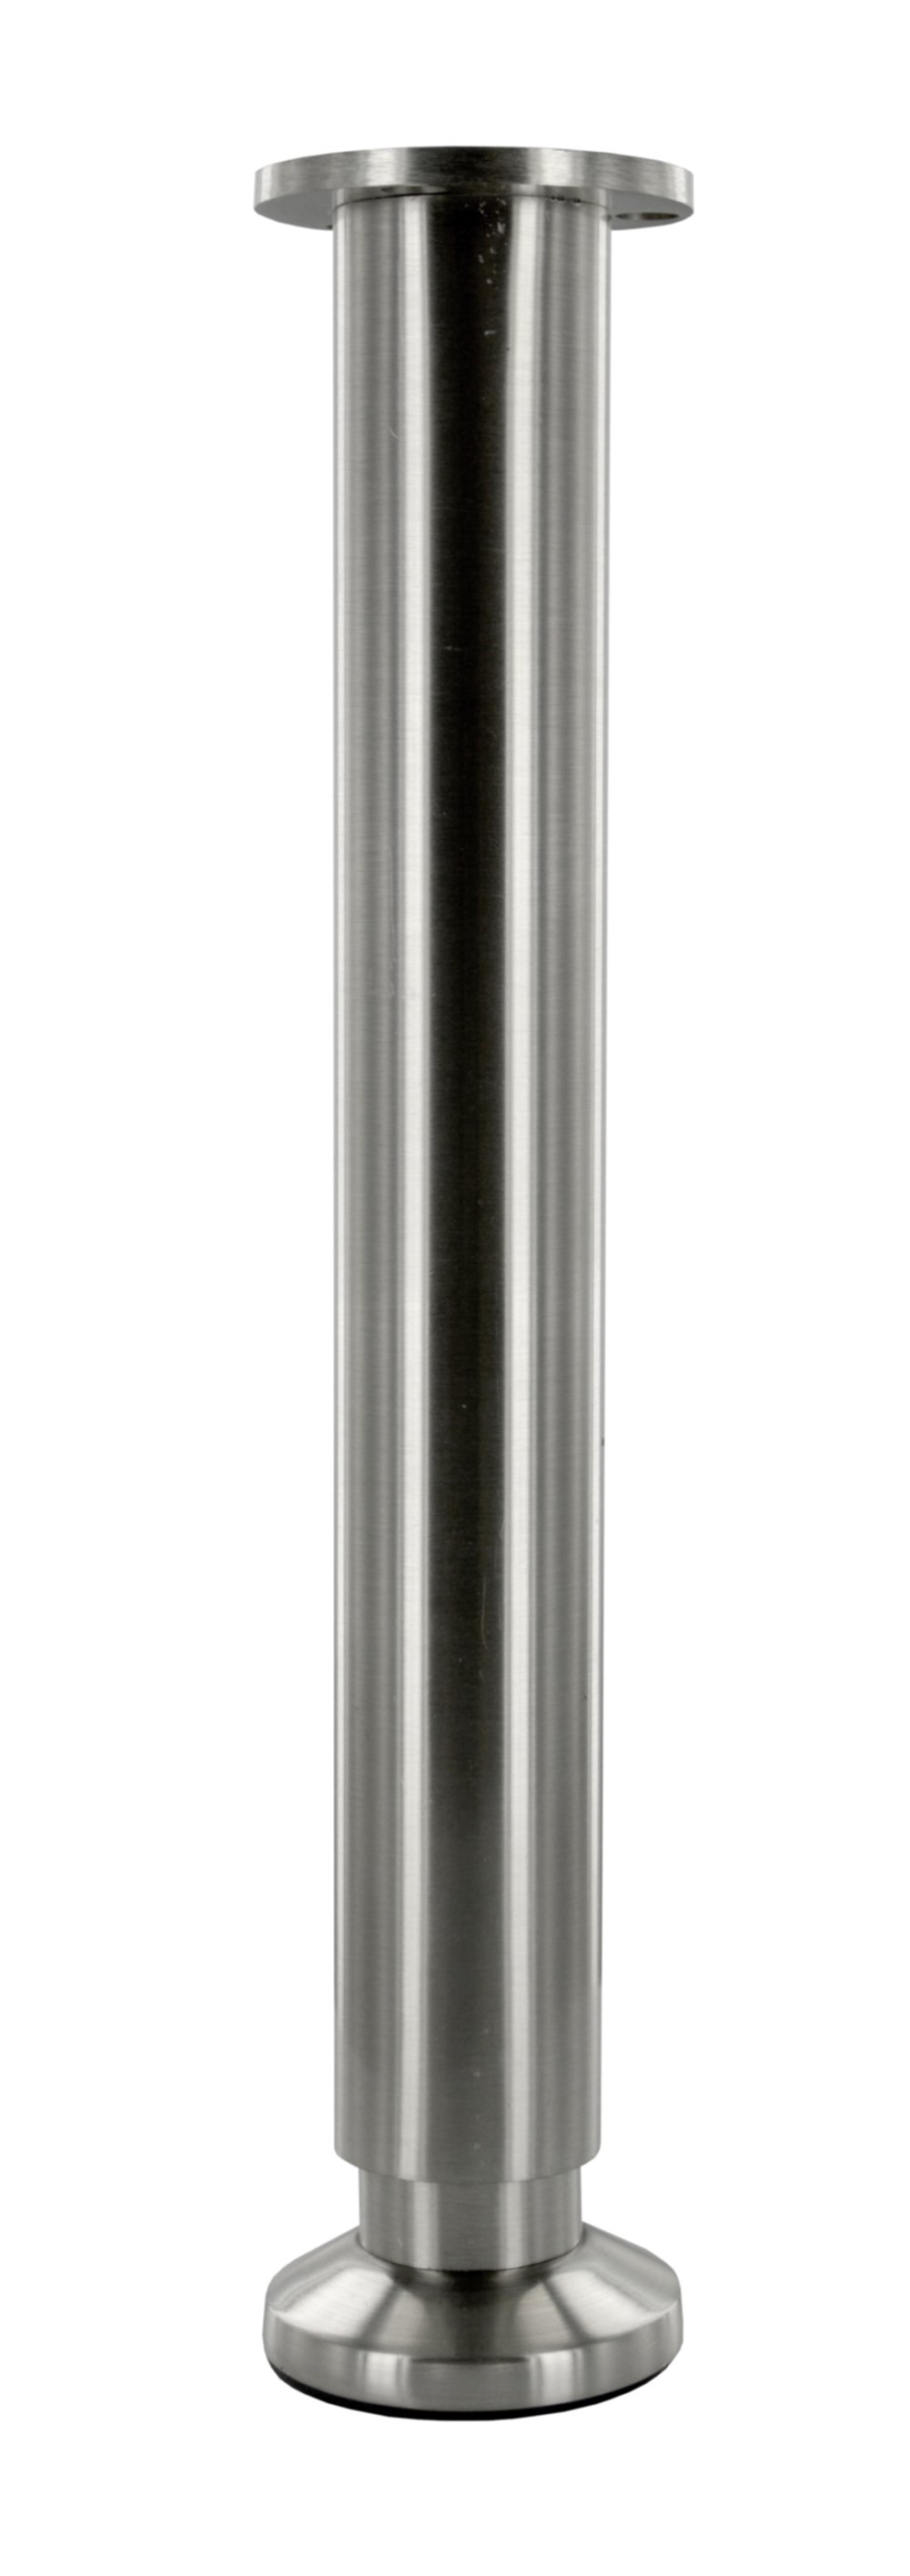 Pied aluminium pour meuble ou caisson. Ø38mm H300 mm Aluminium brossé finition inox - CIME